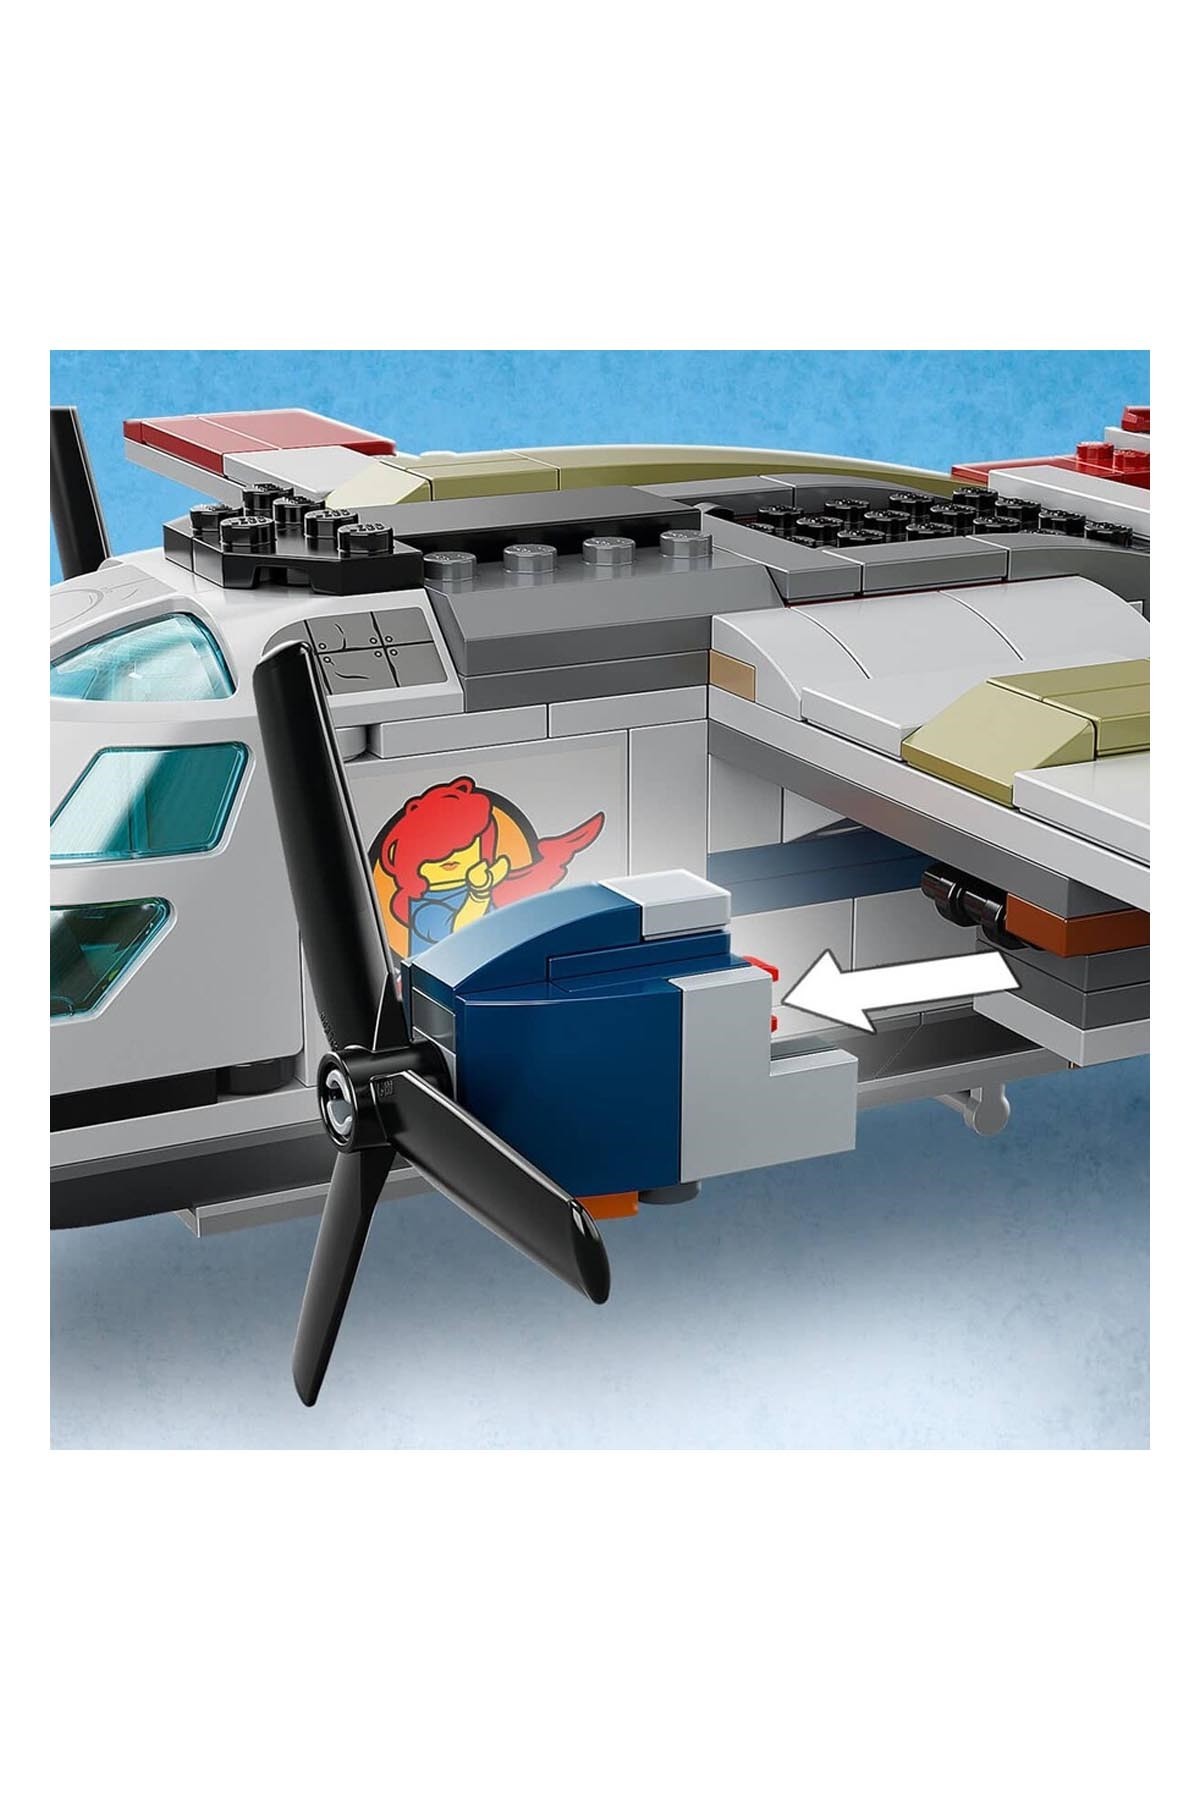 Lego Jurassic World Quetzalcoatlus Uçak Pususu